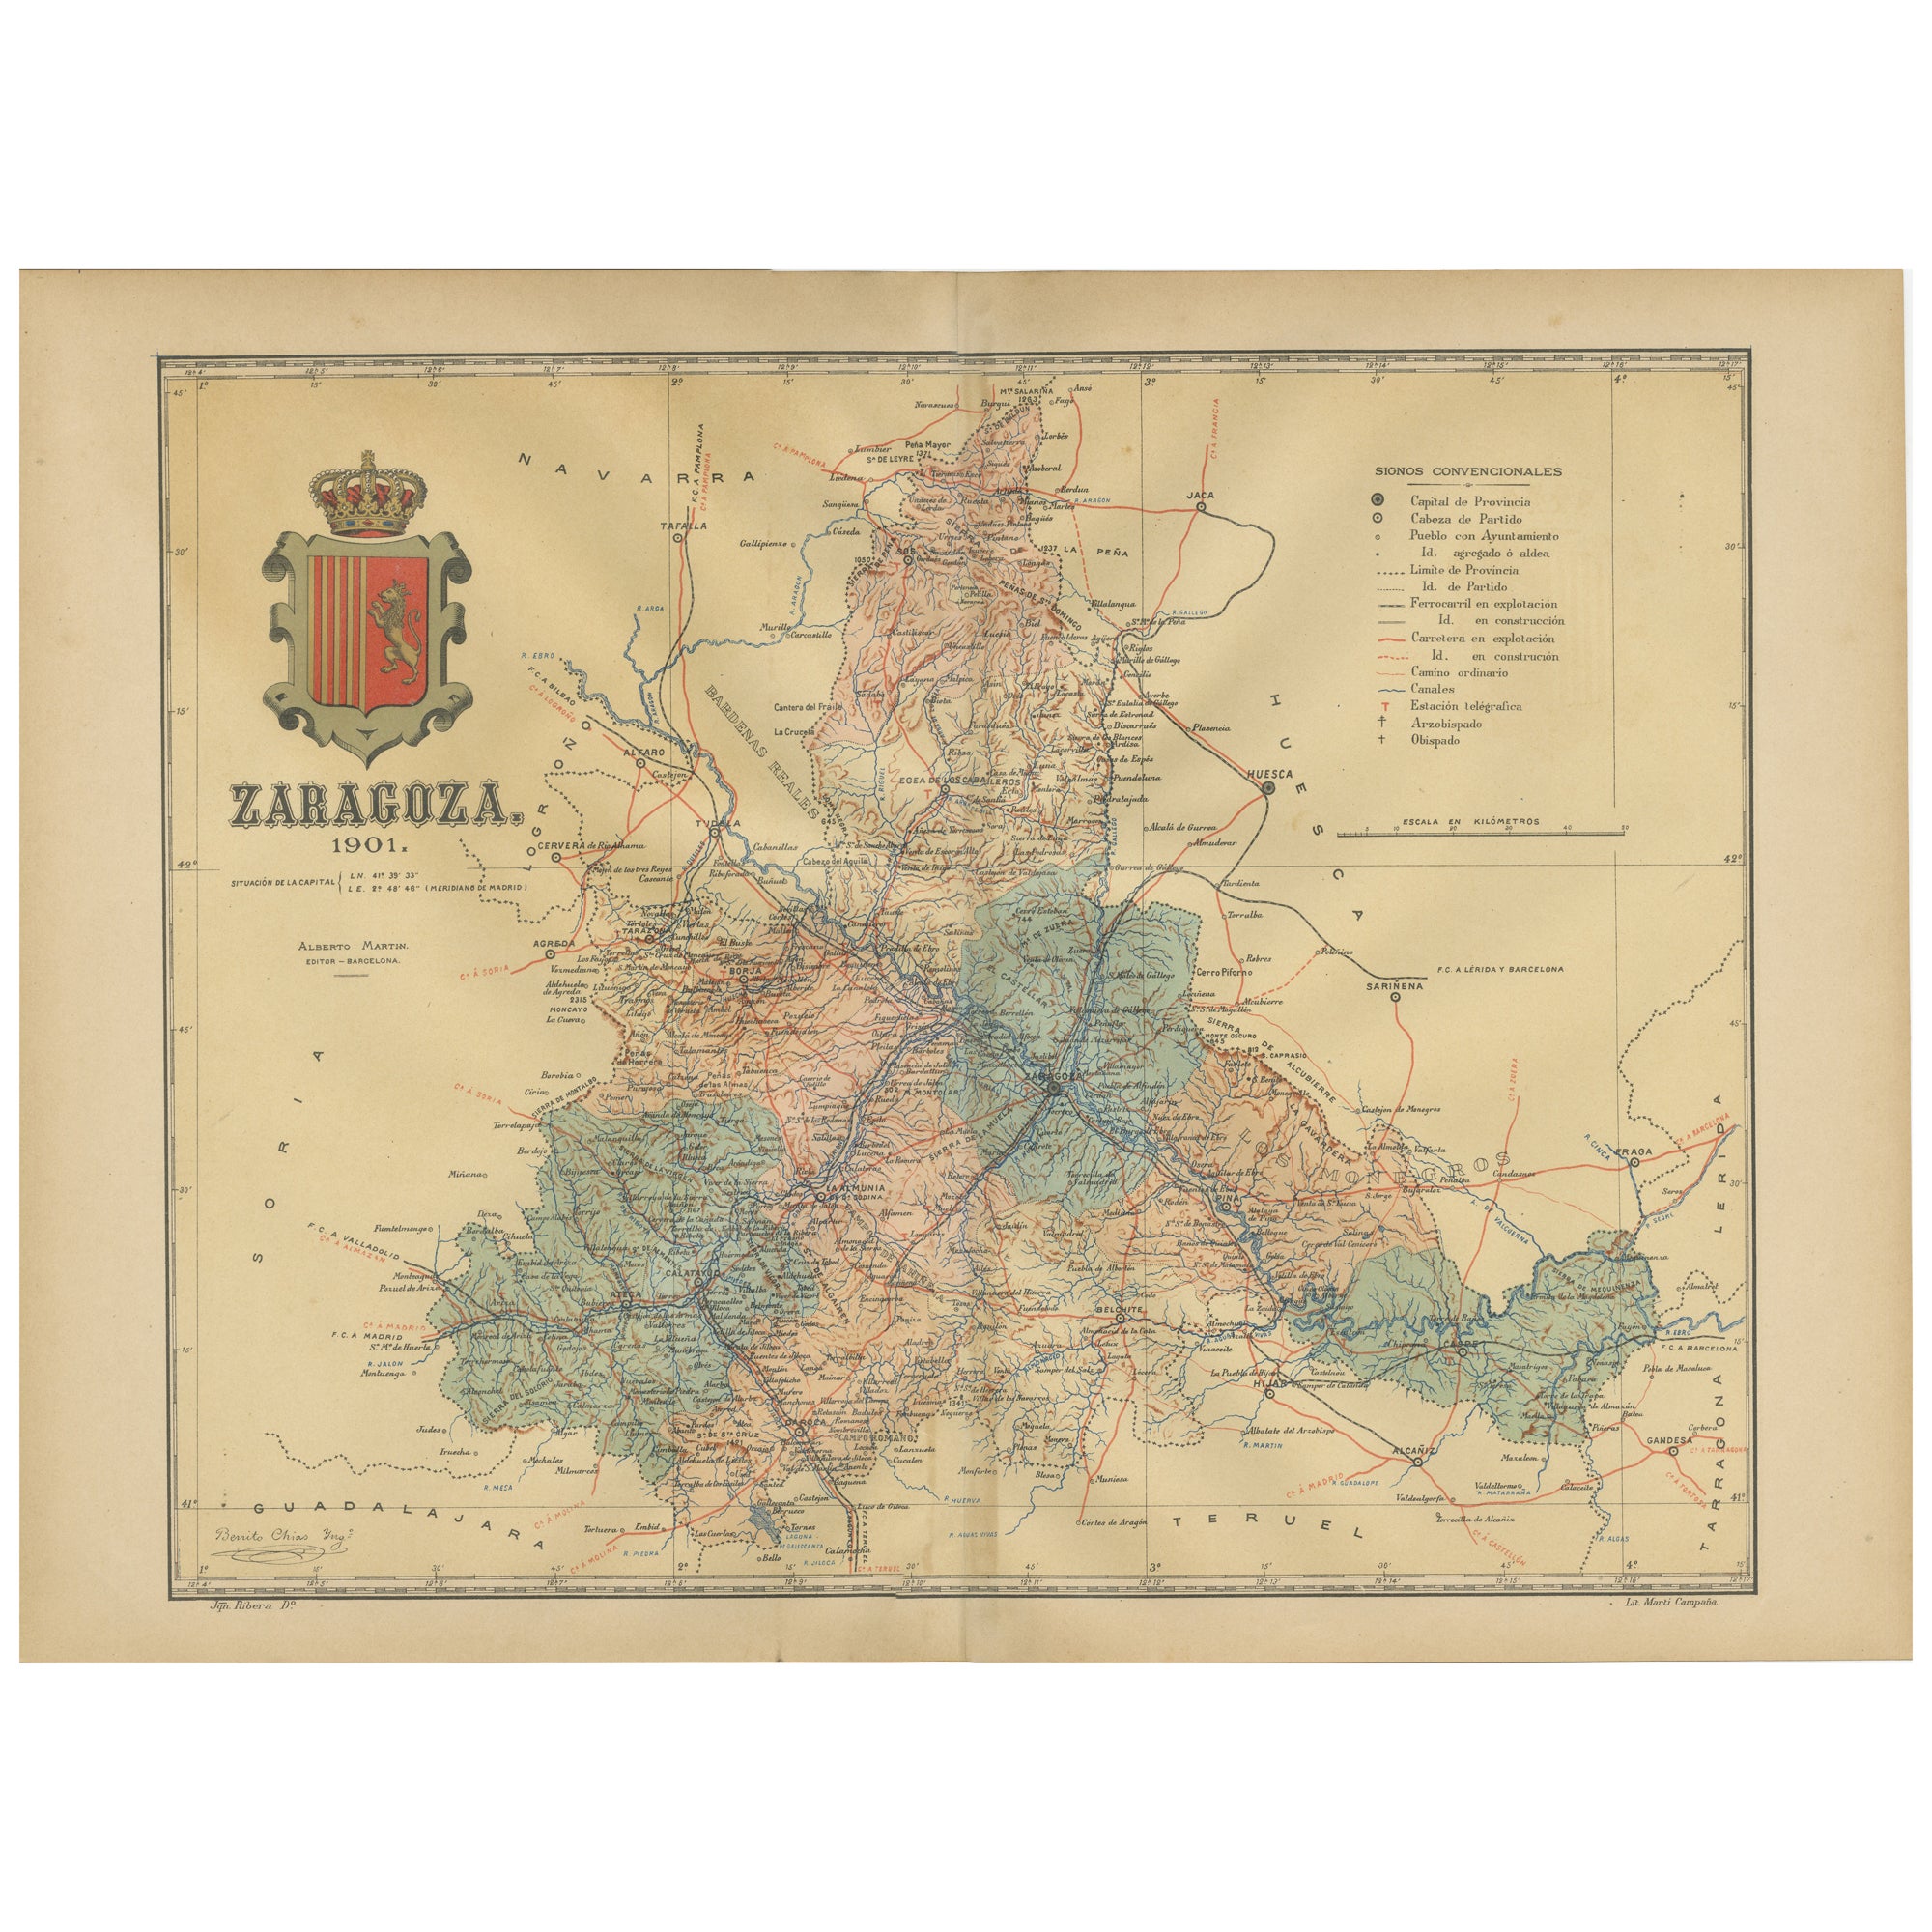 Zaragoza: Kreuzweg des Erbes - The 1901 Cartographic Chronicle